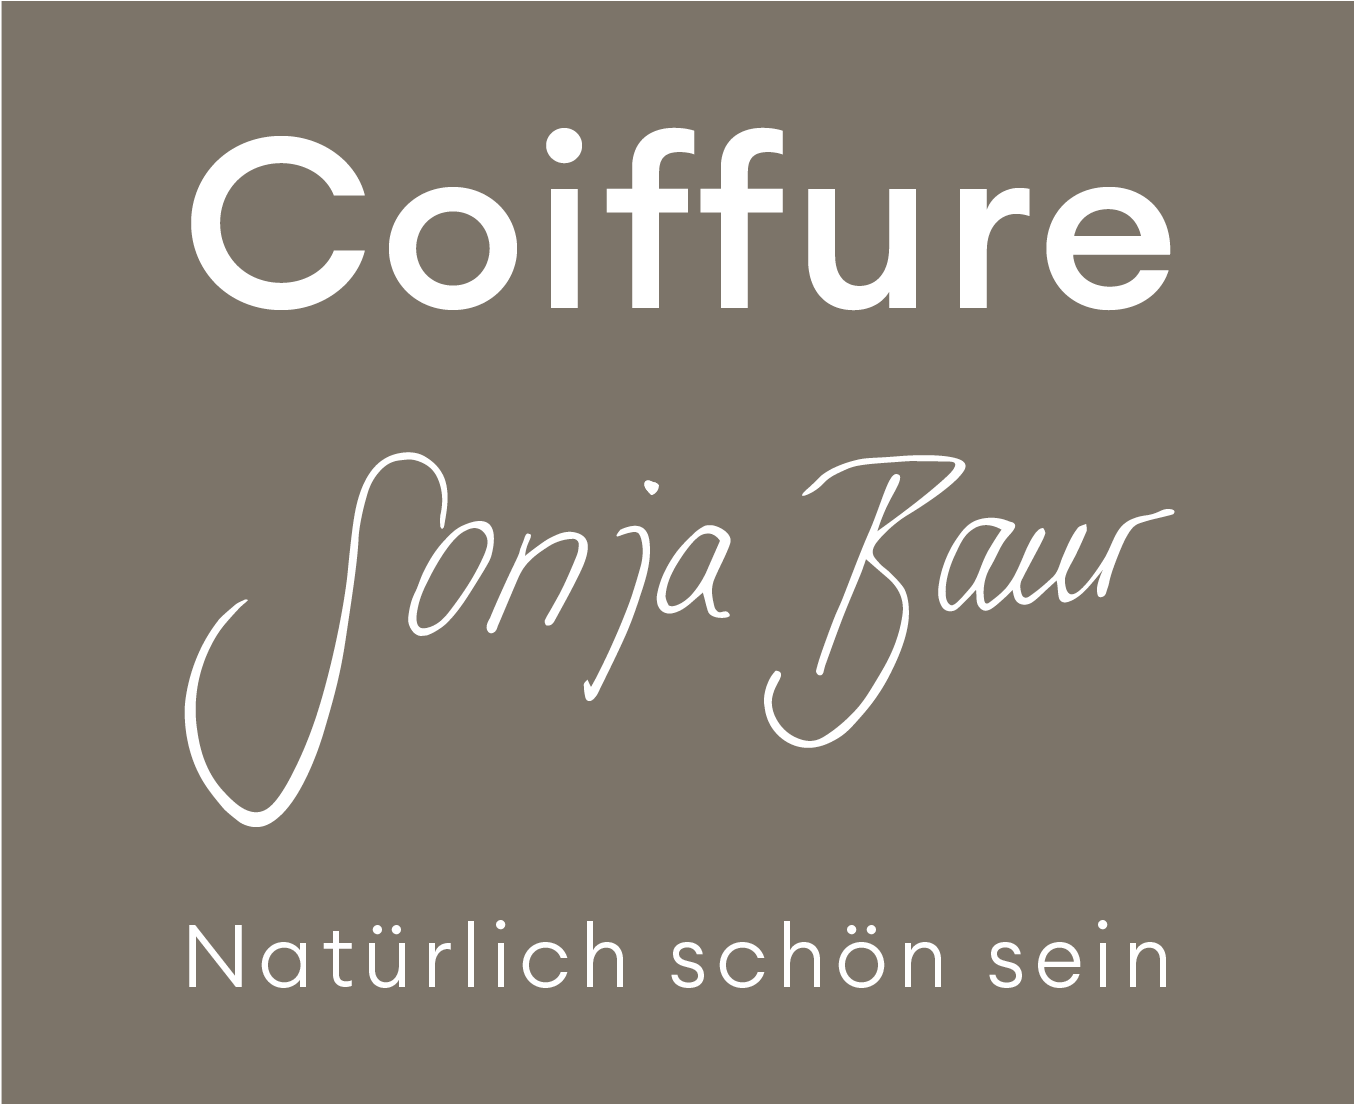 Bilder Natur Coiffure Sonja Baur